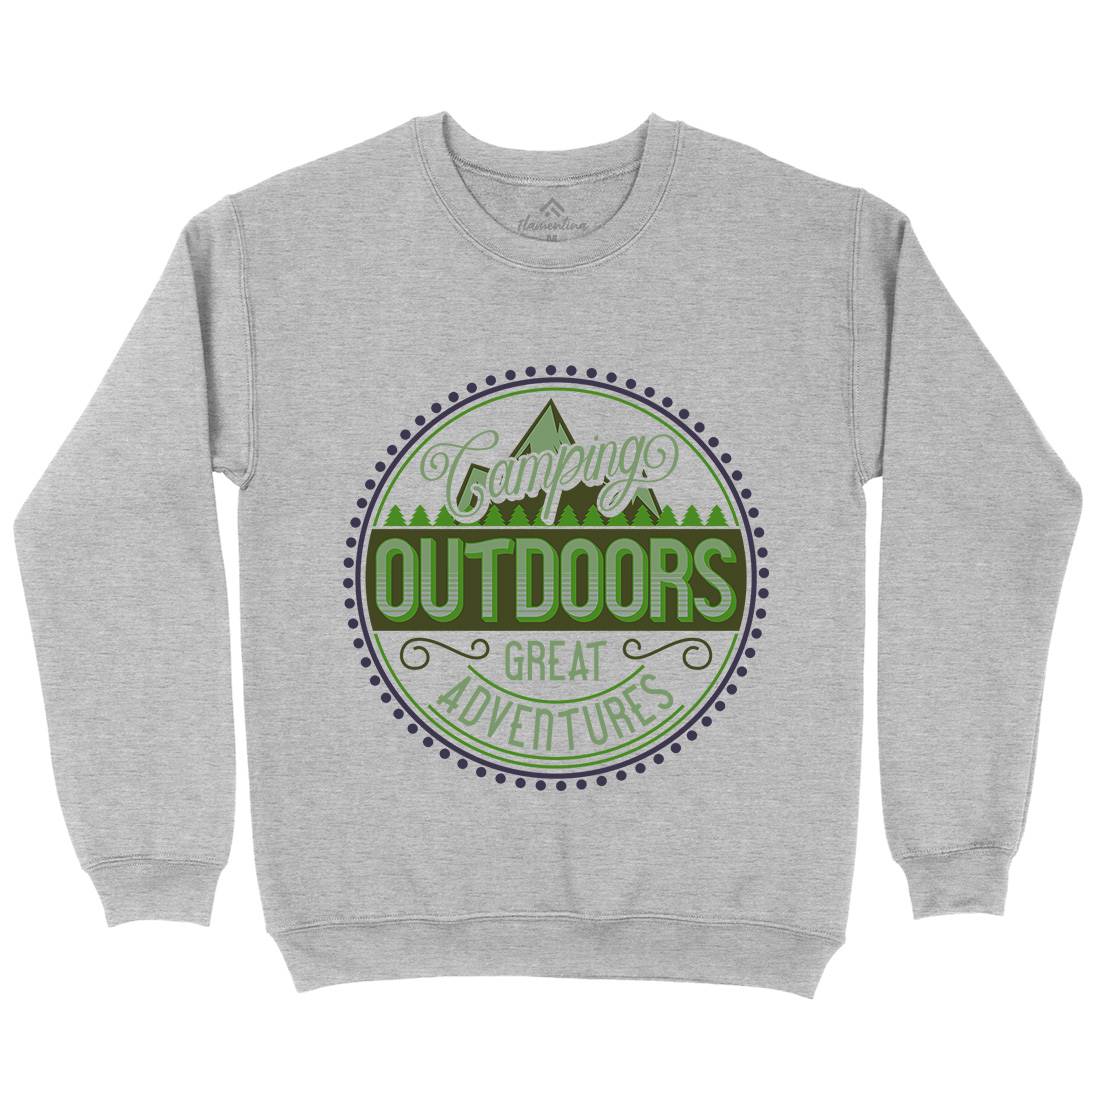 Outdoors Kids Crew Neck Sweatshirt Nature B326